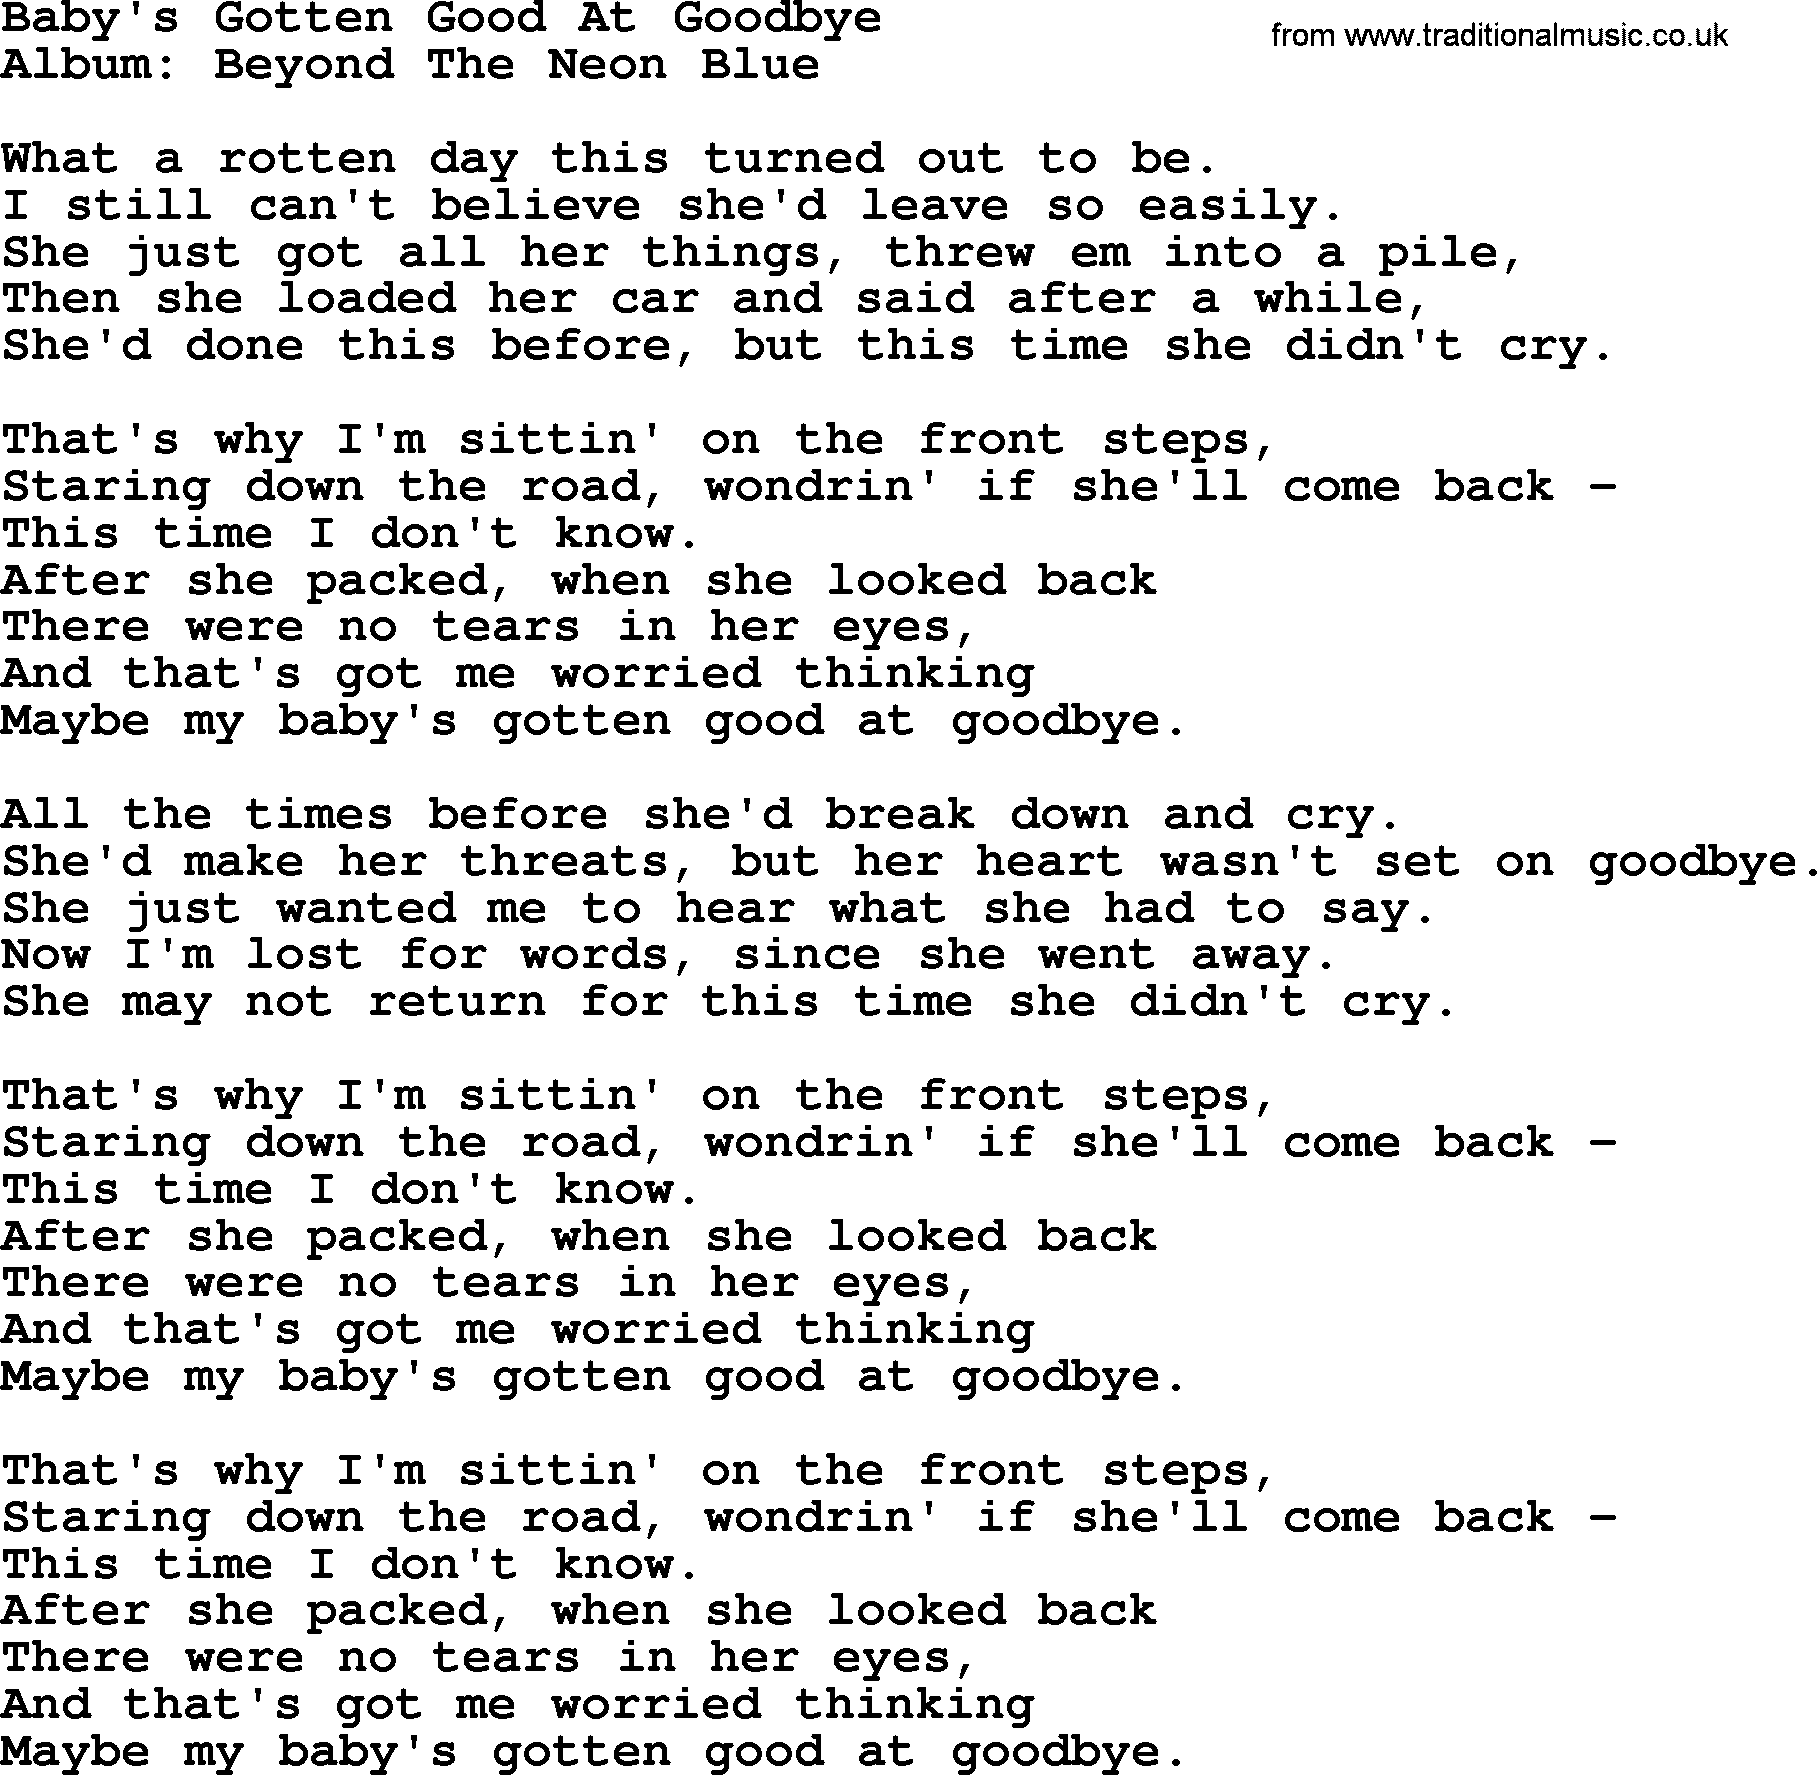 George Strait song: Baby's Gotten Good At Goodbye, lyrics